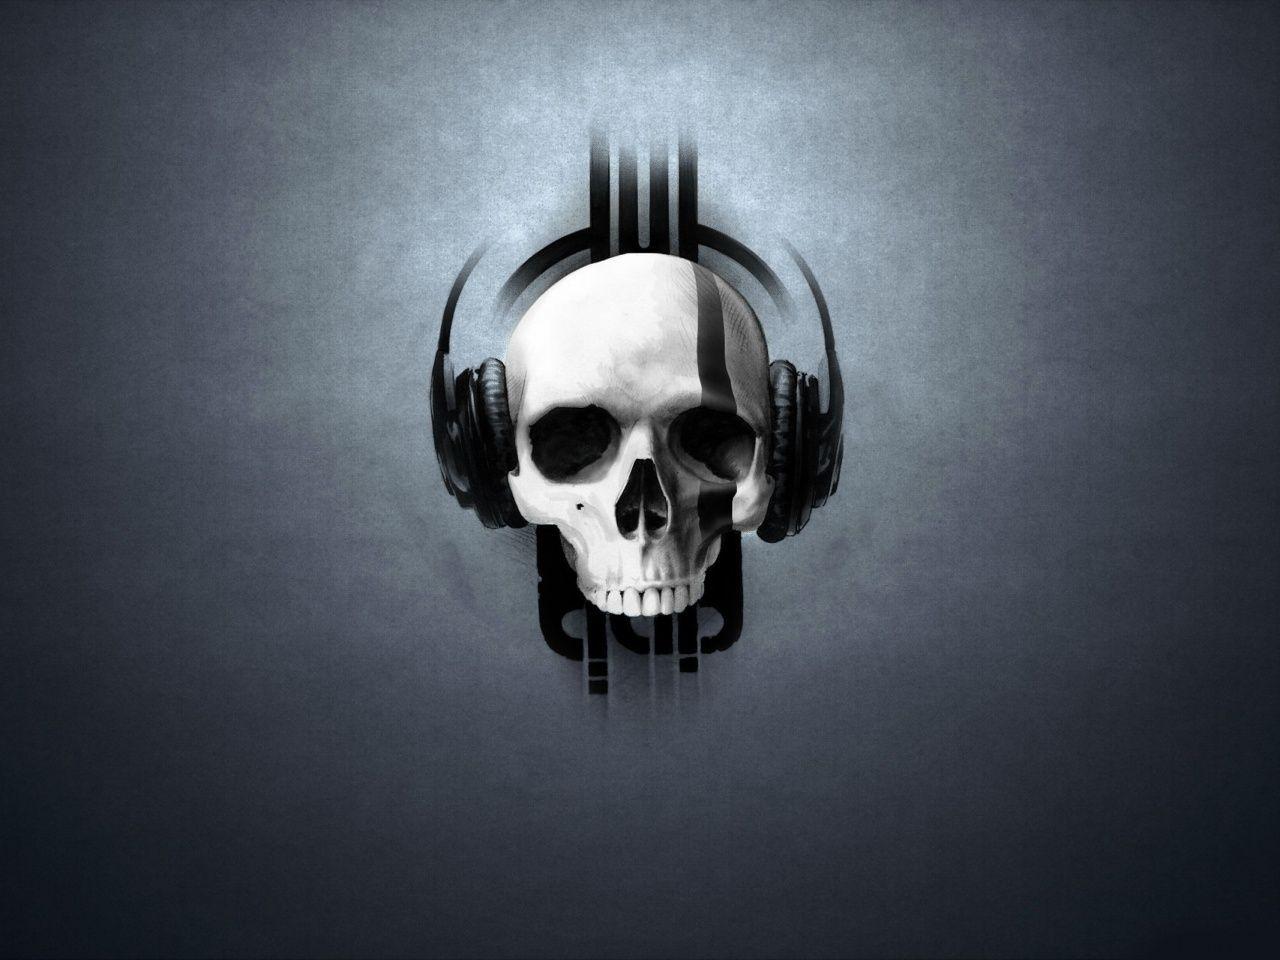 Skull with Headphones Wallpaper Free Skull with Headphones Background